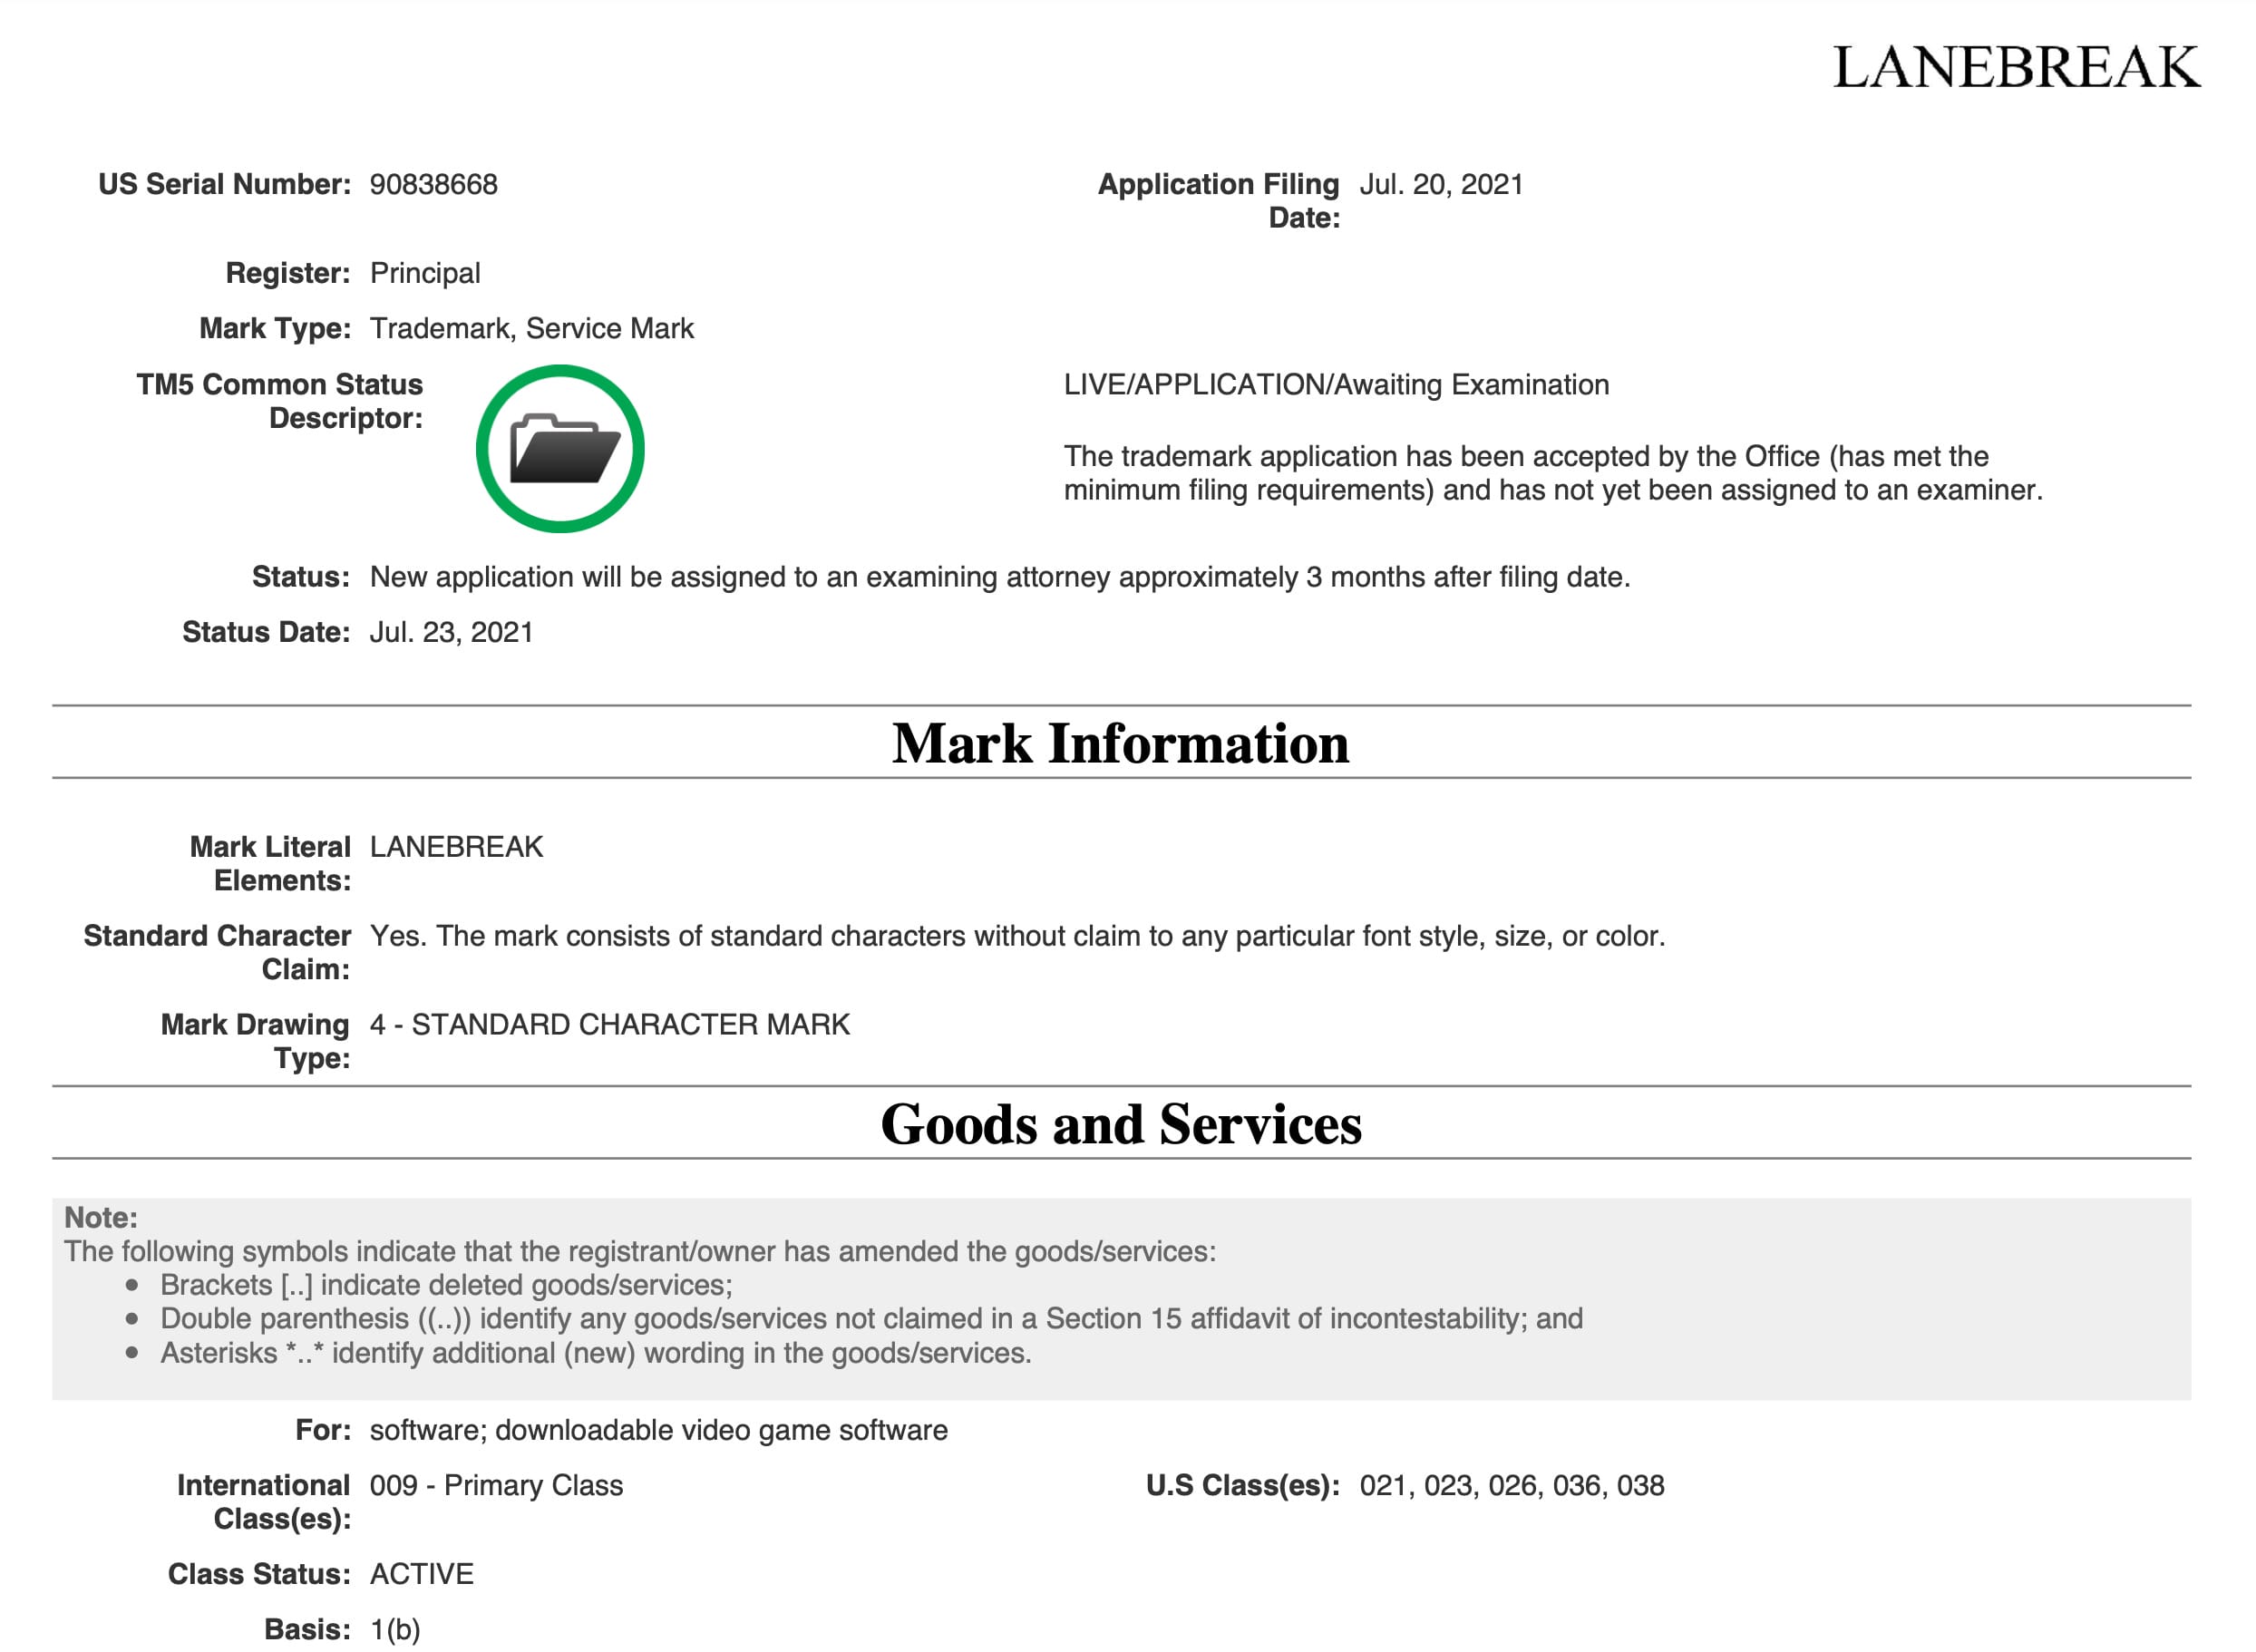 Peloton Lanebreak Trademark Application with the USPTO.